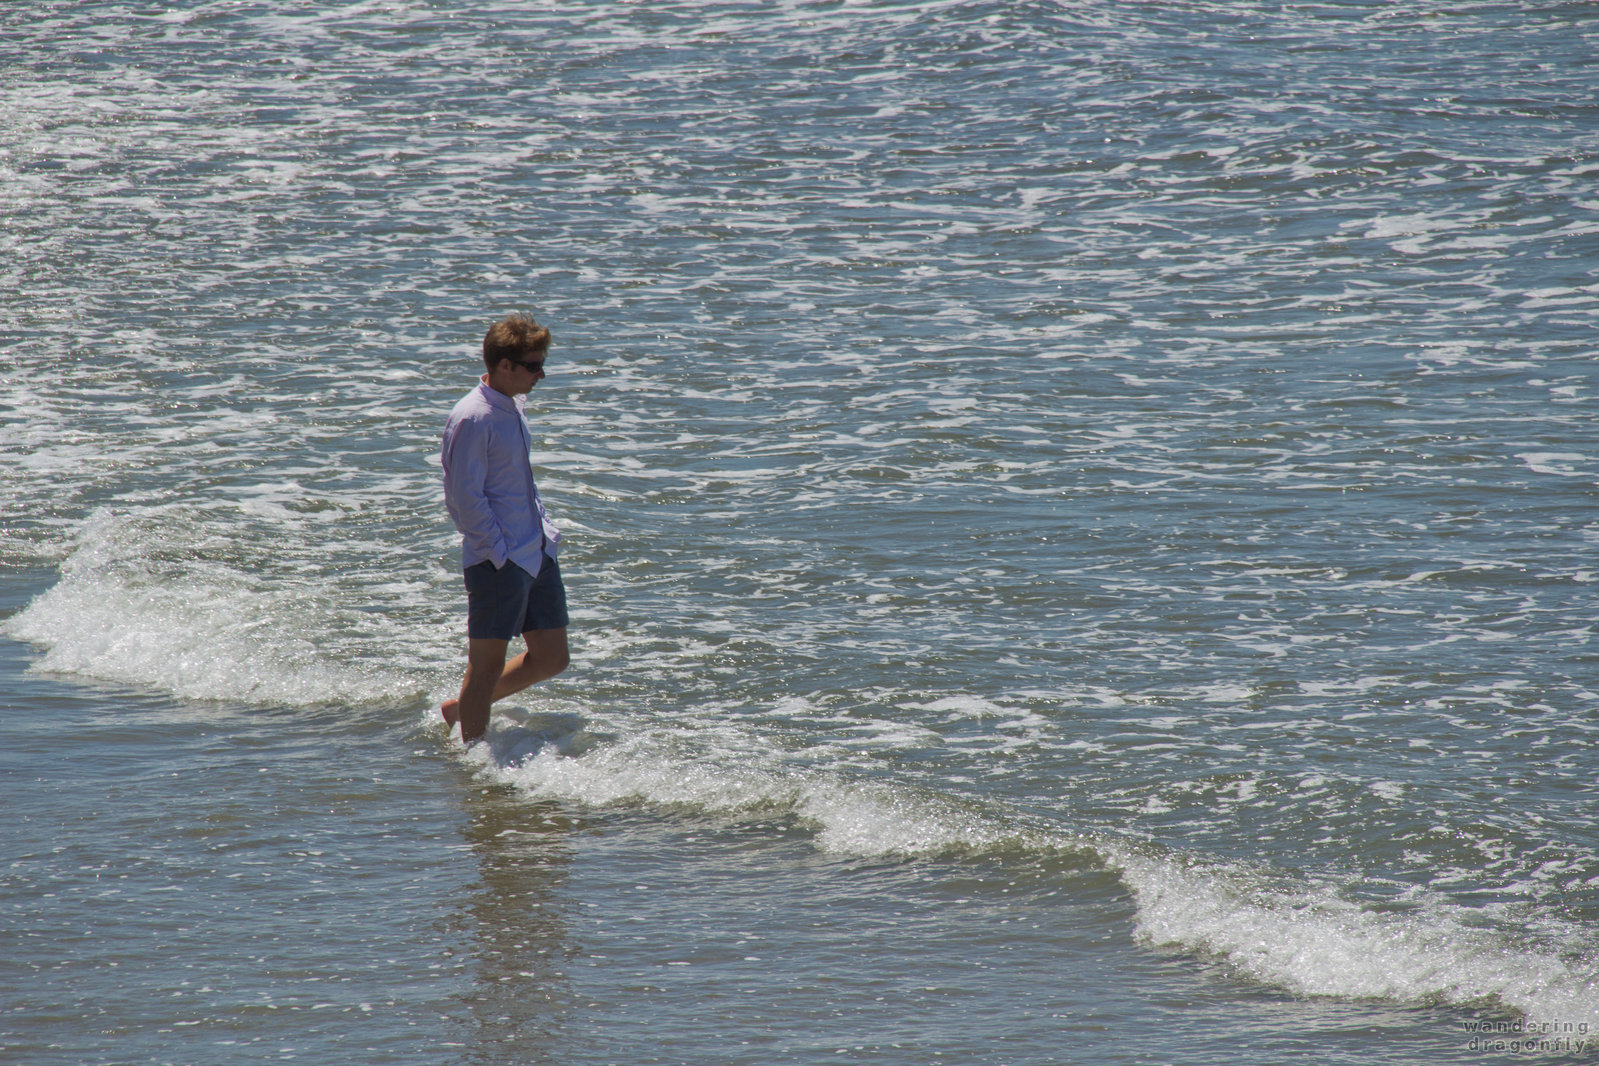 It'd be a waste to skip a walk in the ocean -- man, walking, water